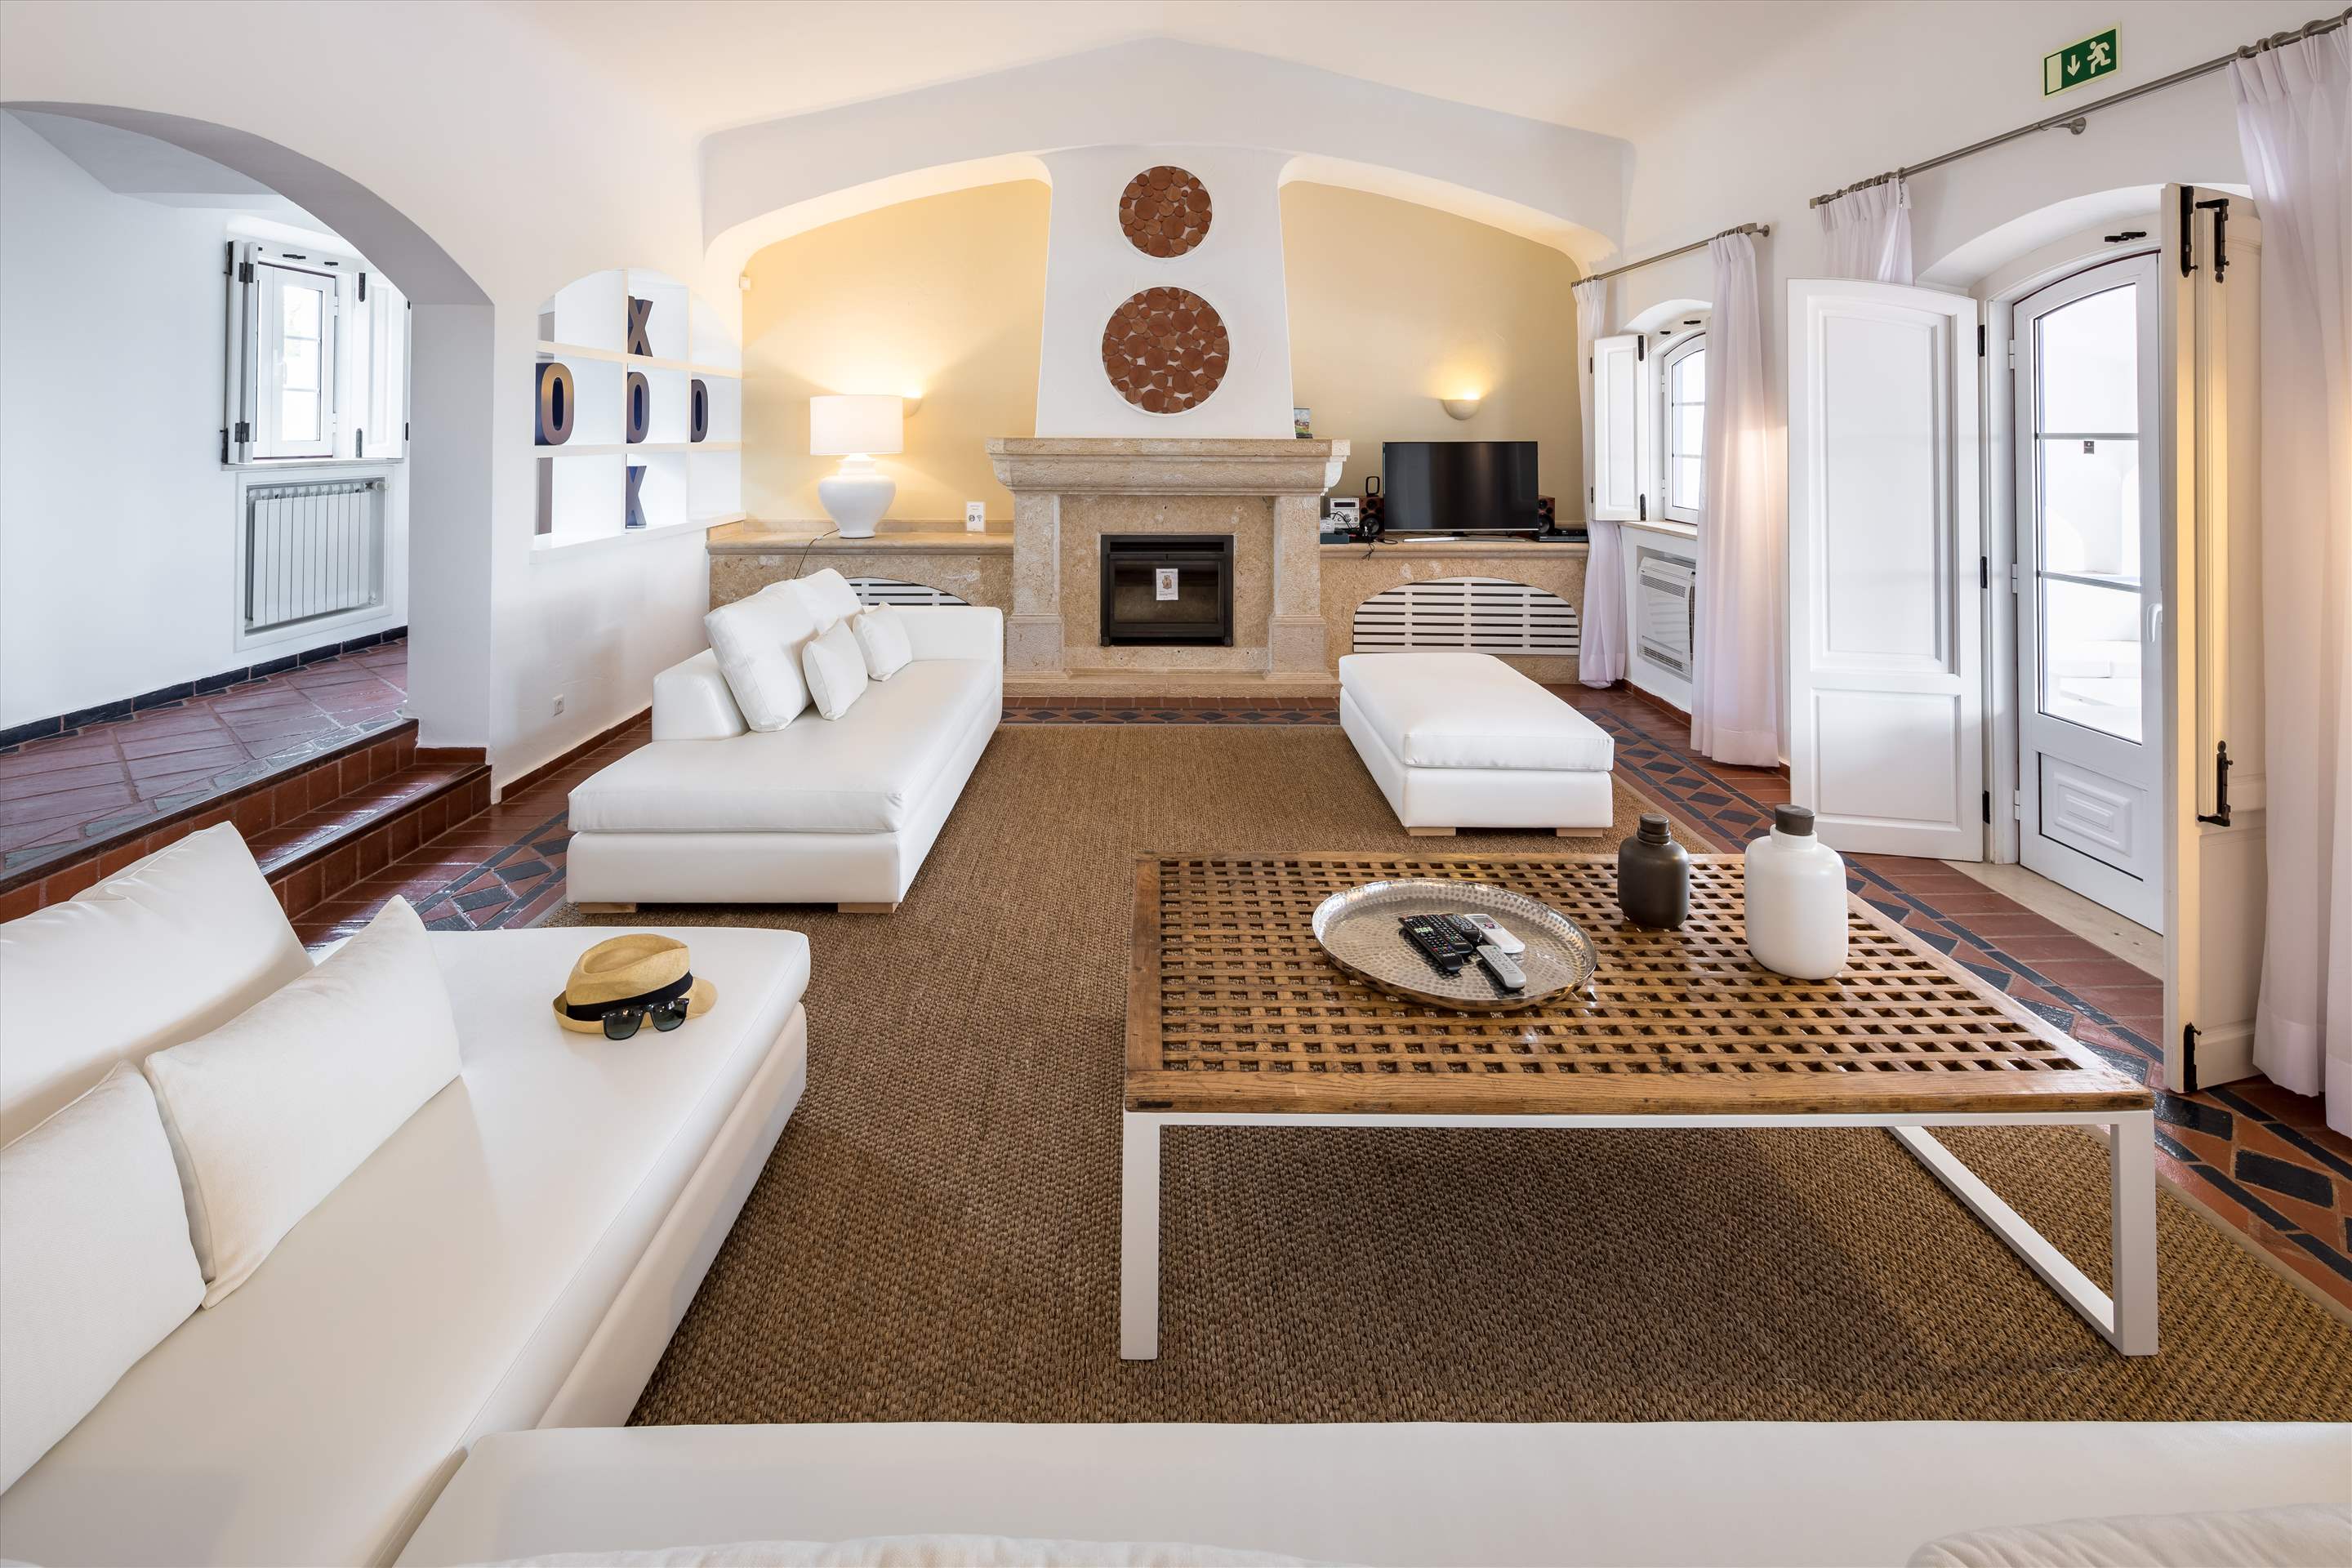 Casa Cahombo, 3 bedroom rate, main house only, 3 bedroom villa in Vilamoura Area, Algarve Photo #3